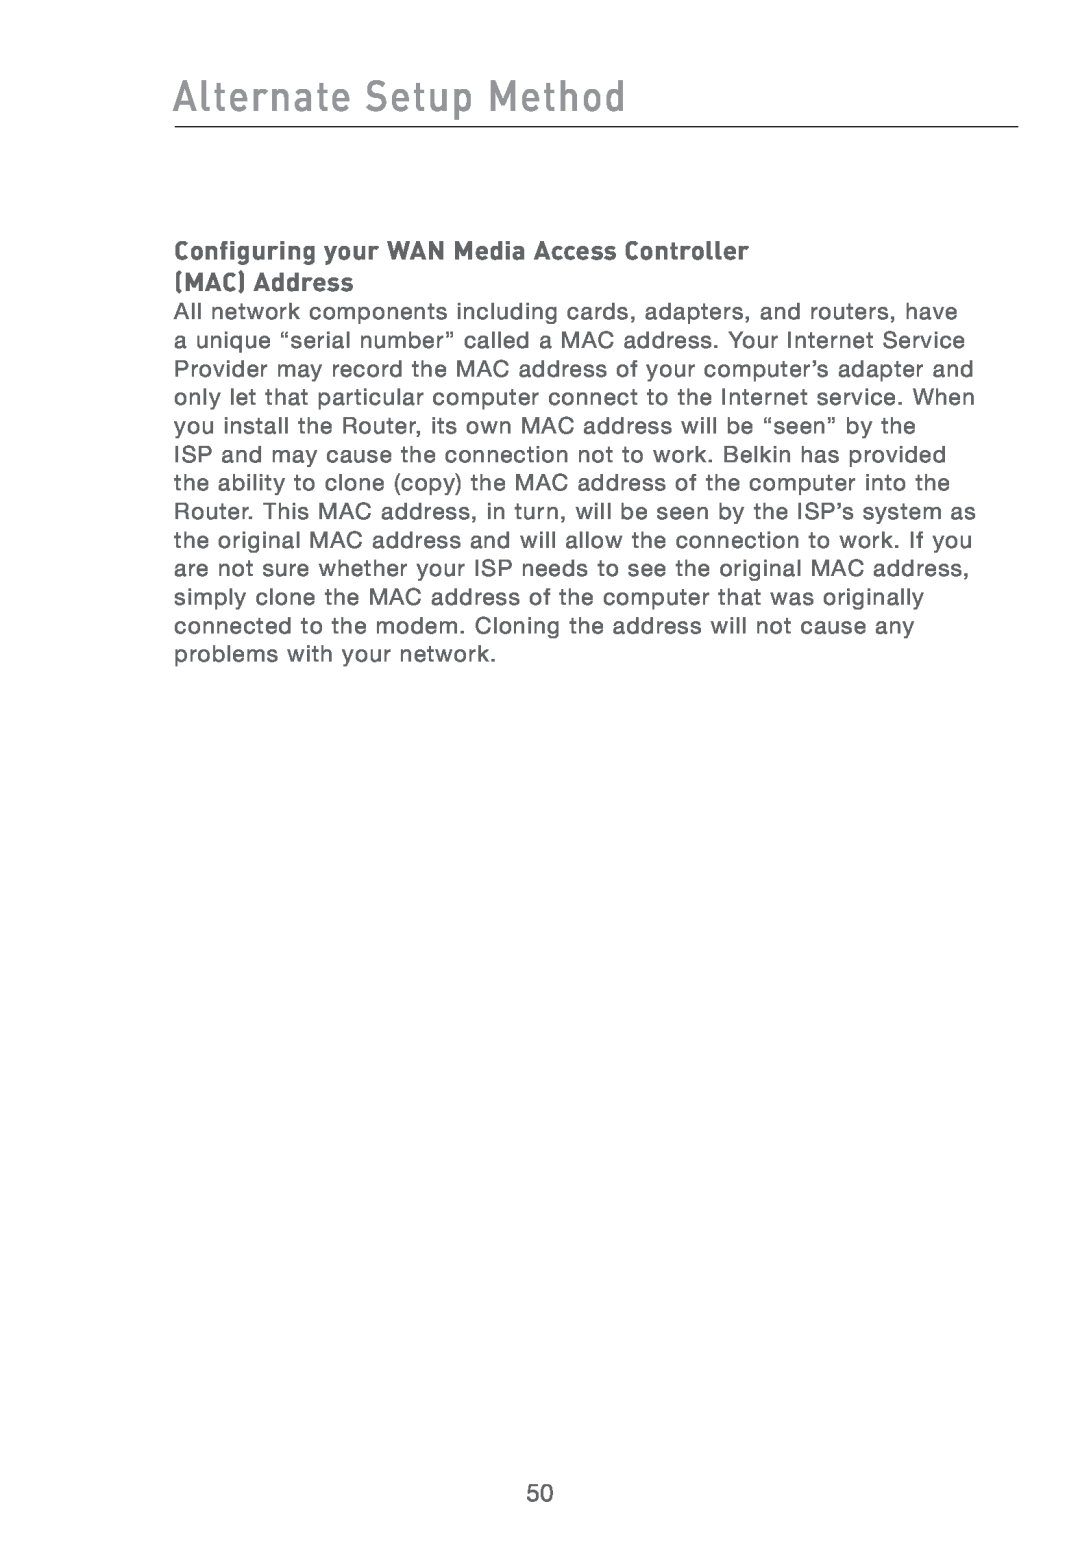 Belkin F5D7231-4P user manual Configuring your WAN Media Access Controller MAC Address, Alternate Setup Method 